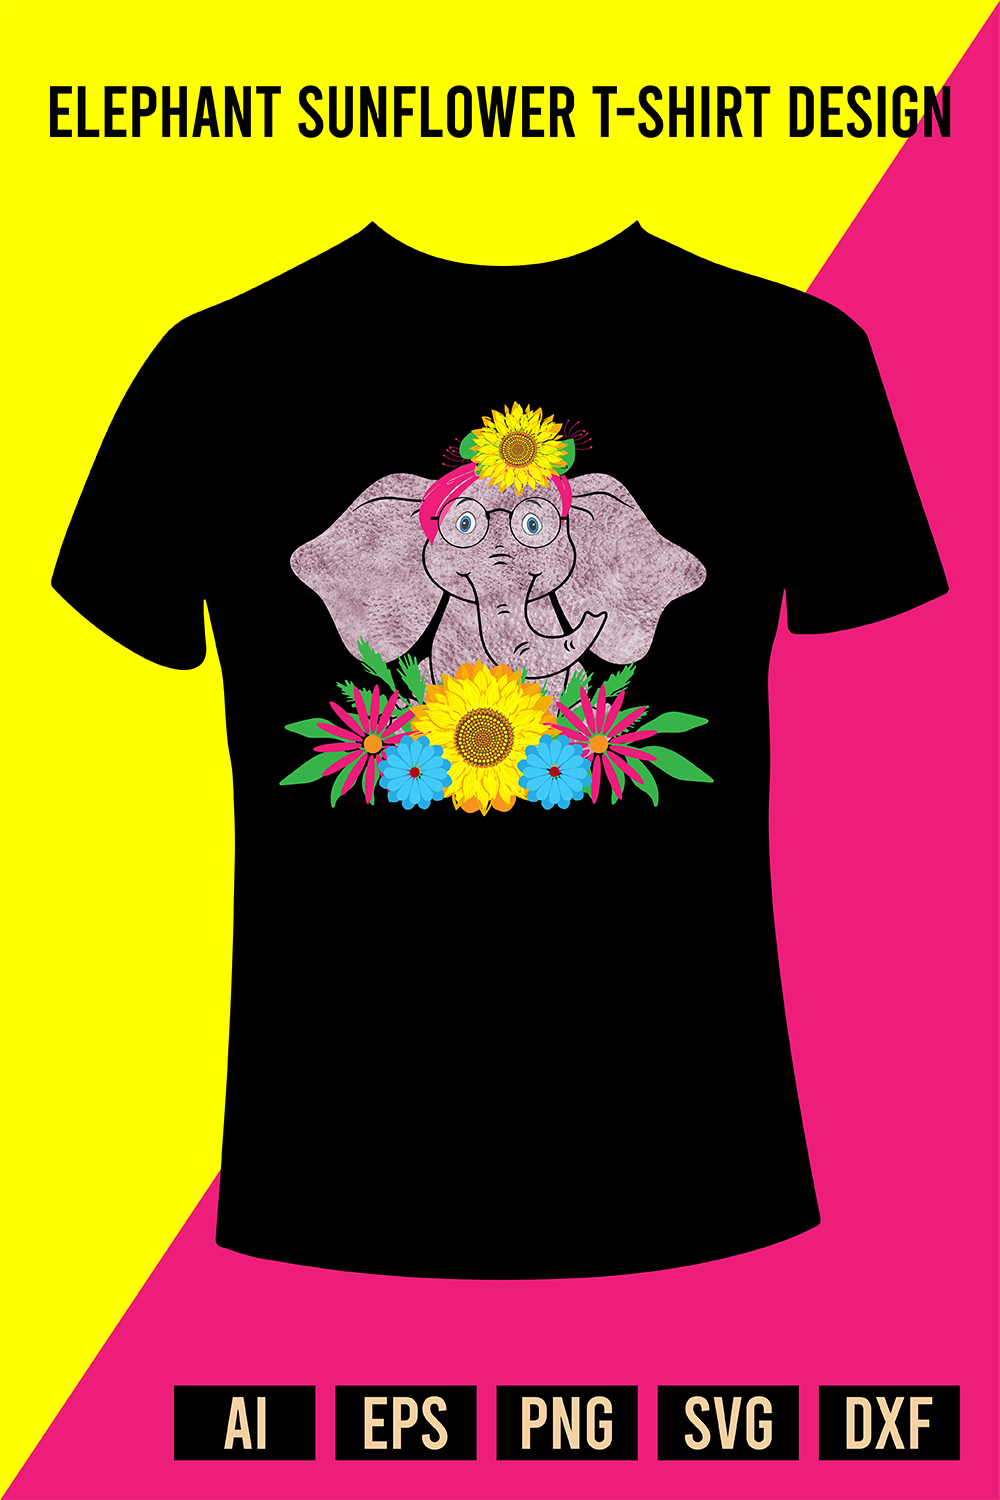 Elephant Sunflower T-Shirt Design pinterest preview image.